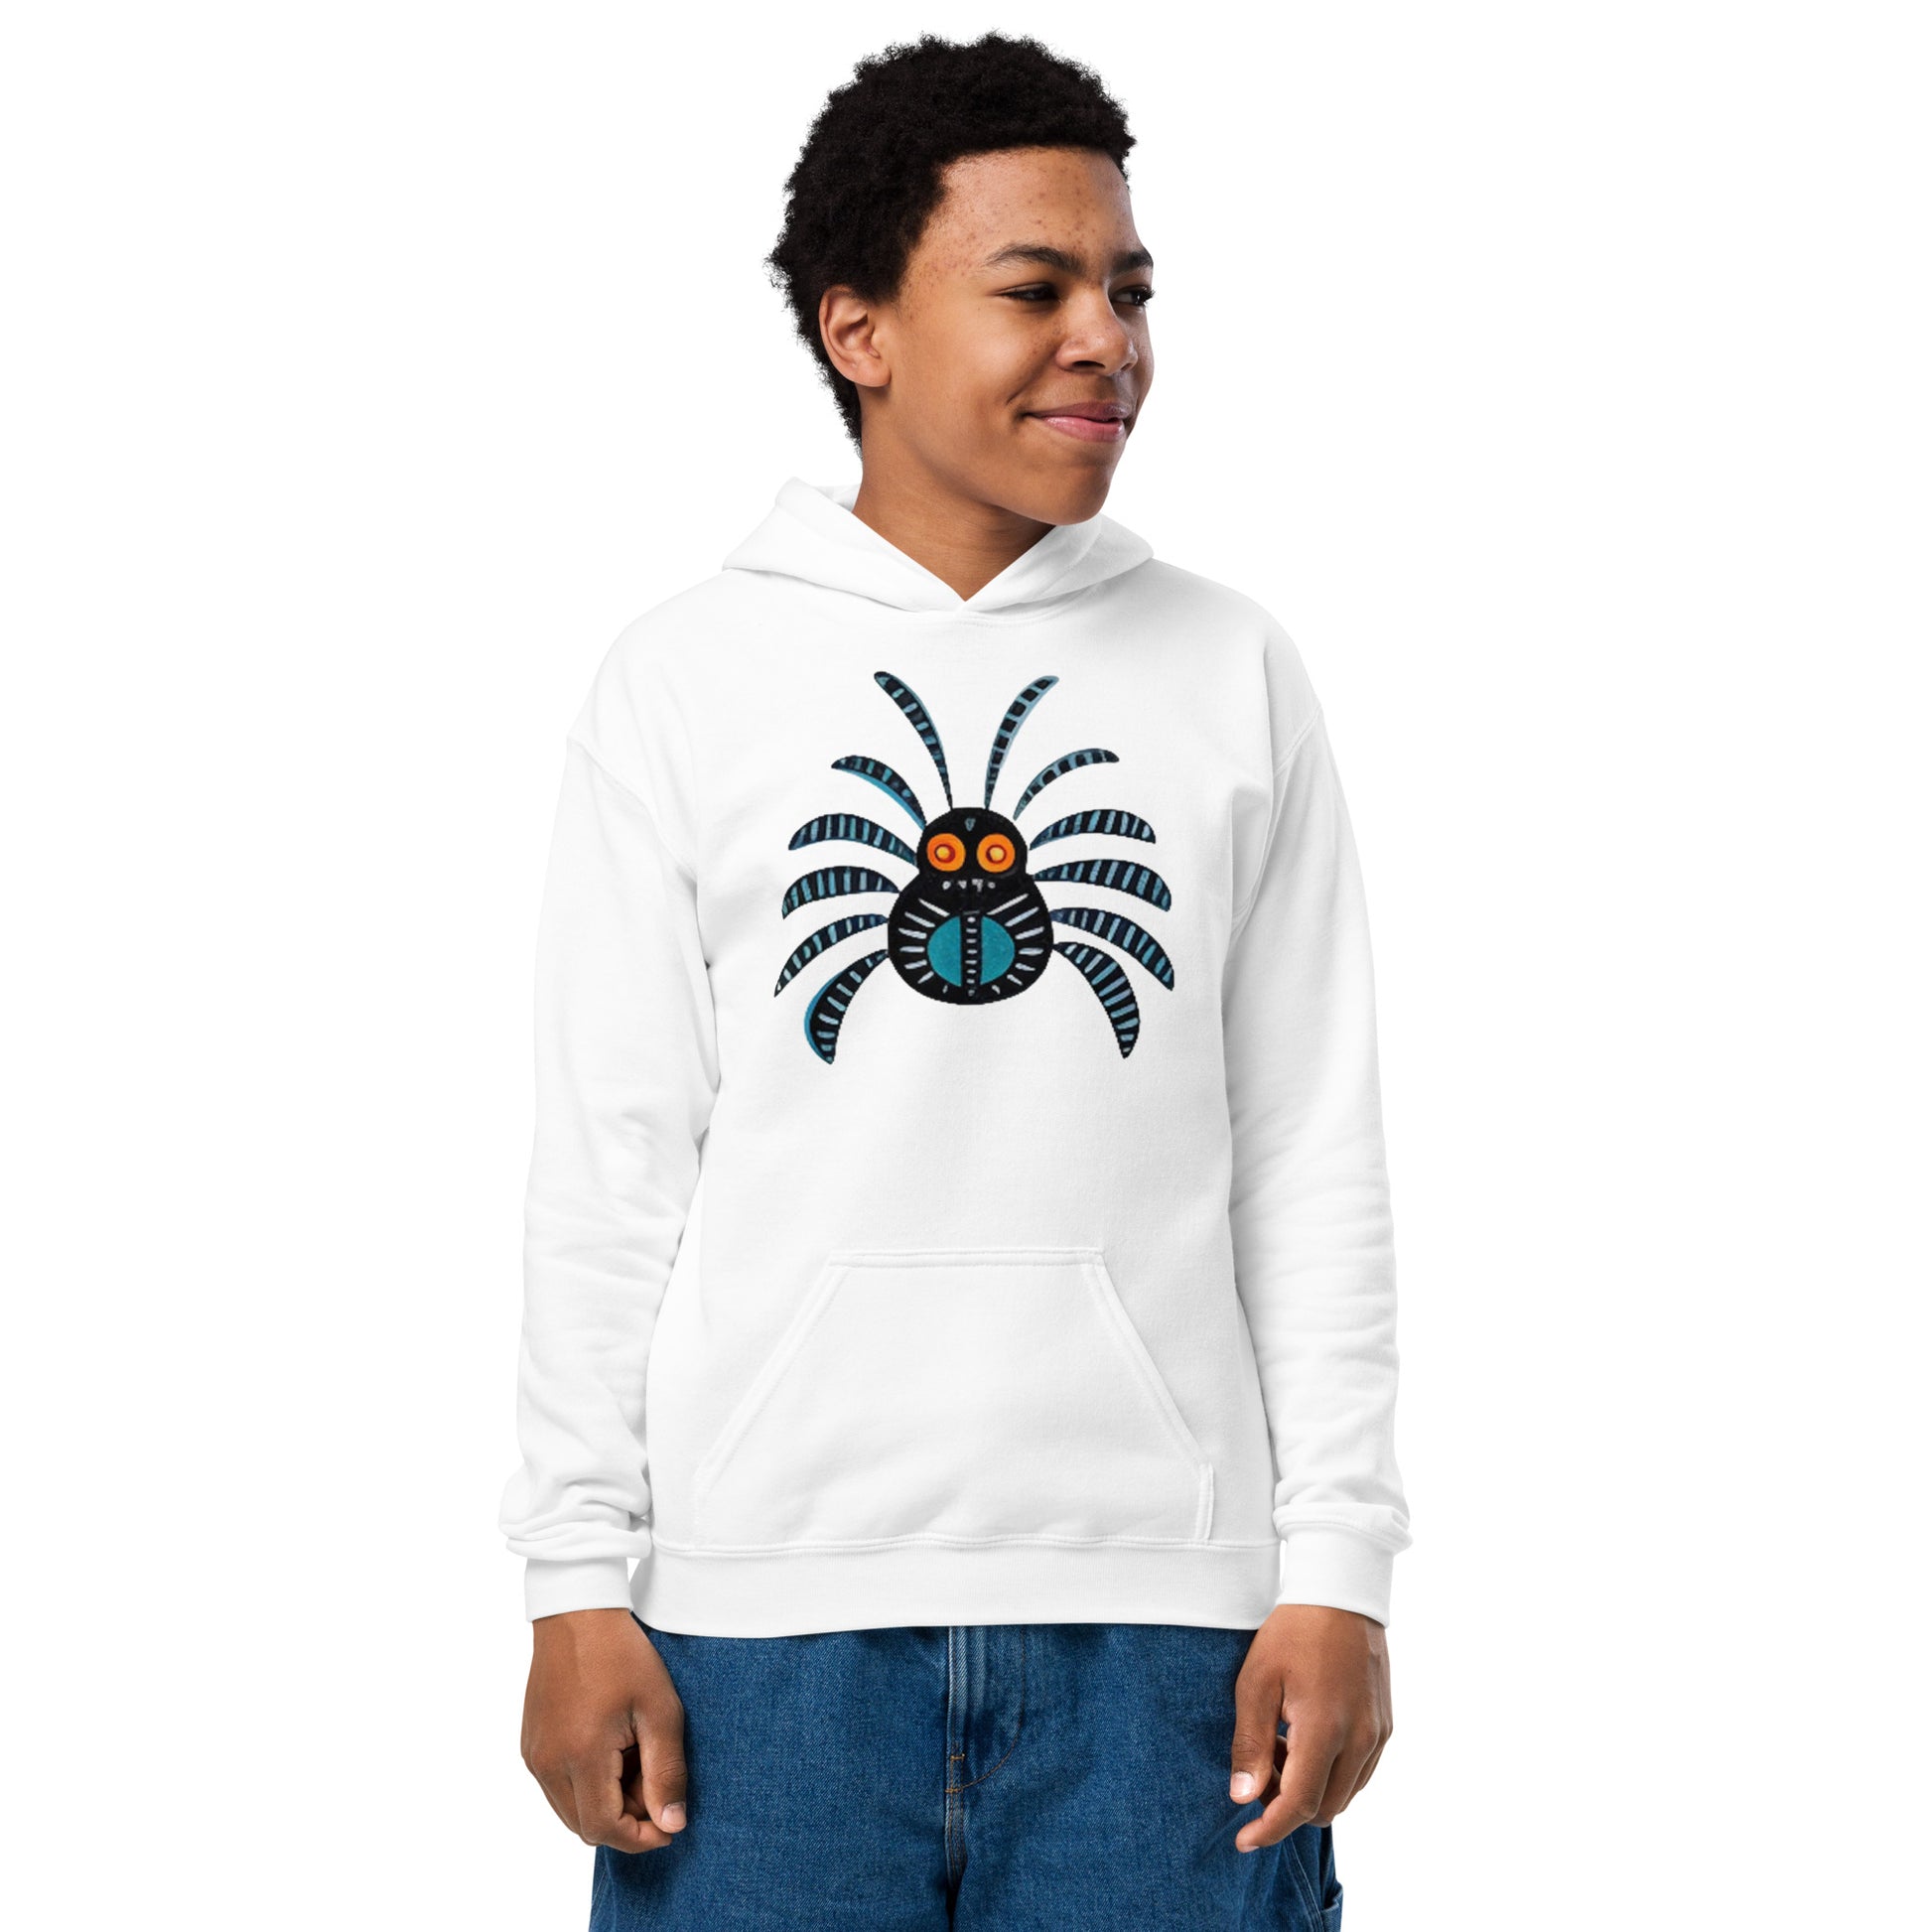 blend Striped – Critter #02 Spider hoodie k2r2 heavy design Youth